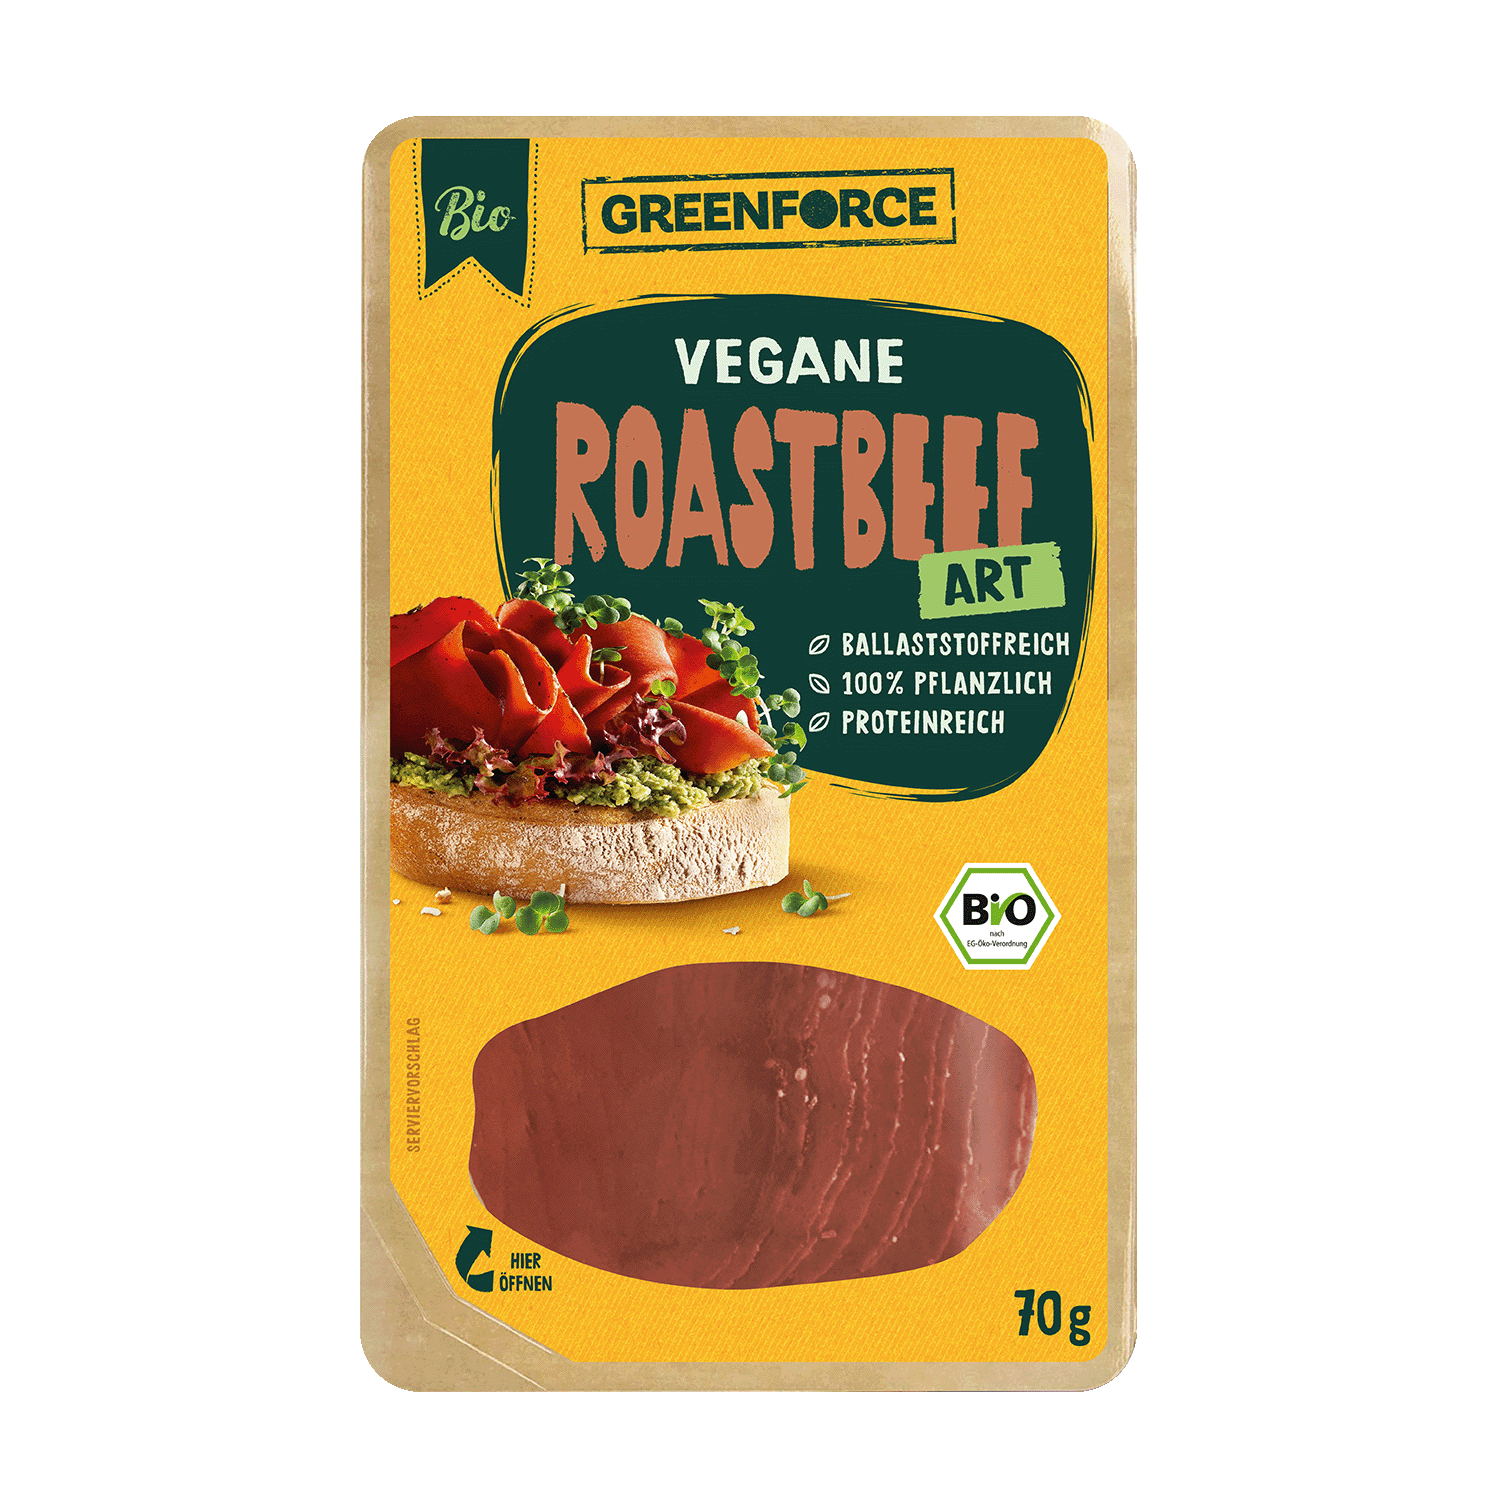 Vegane Roastbeef Art, BIO, 70g